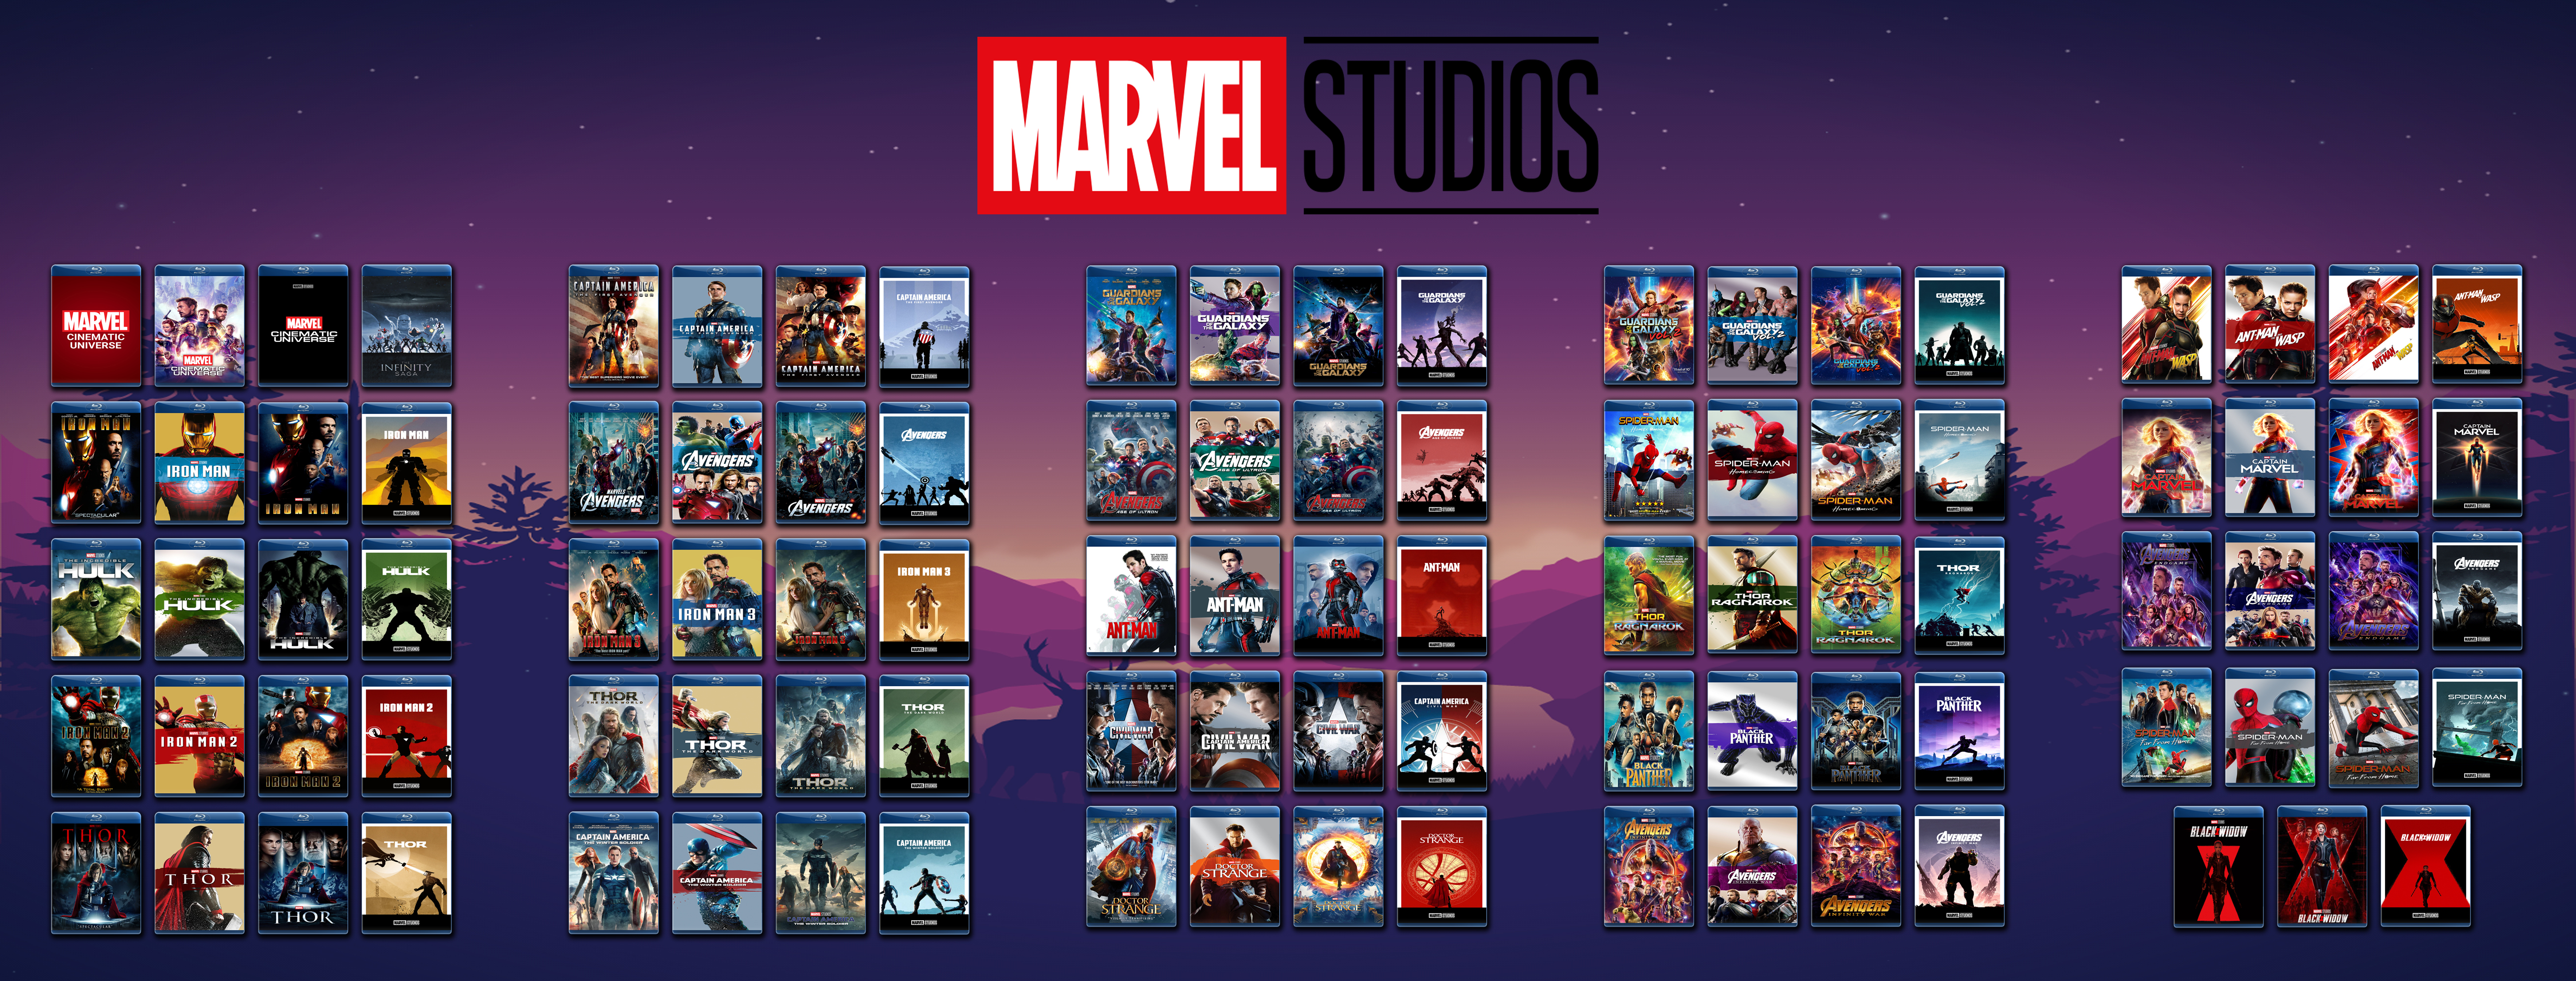 Marvel Studios Collection - Blu-ray Icons by lemuskv on DeviantArt